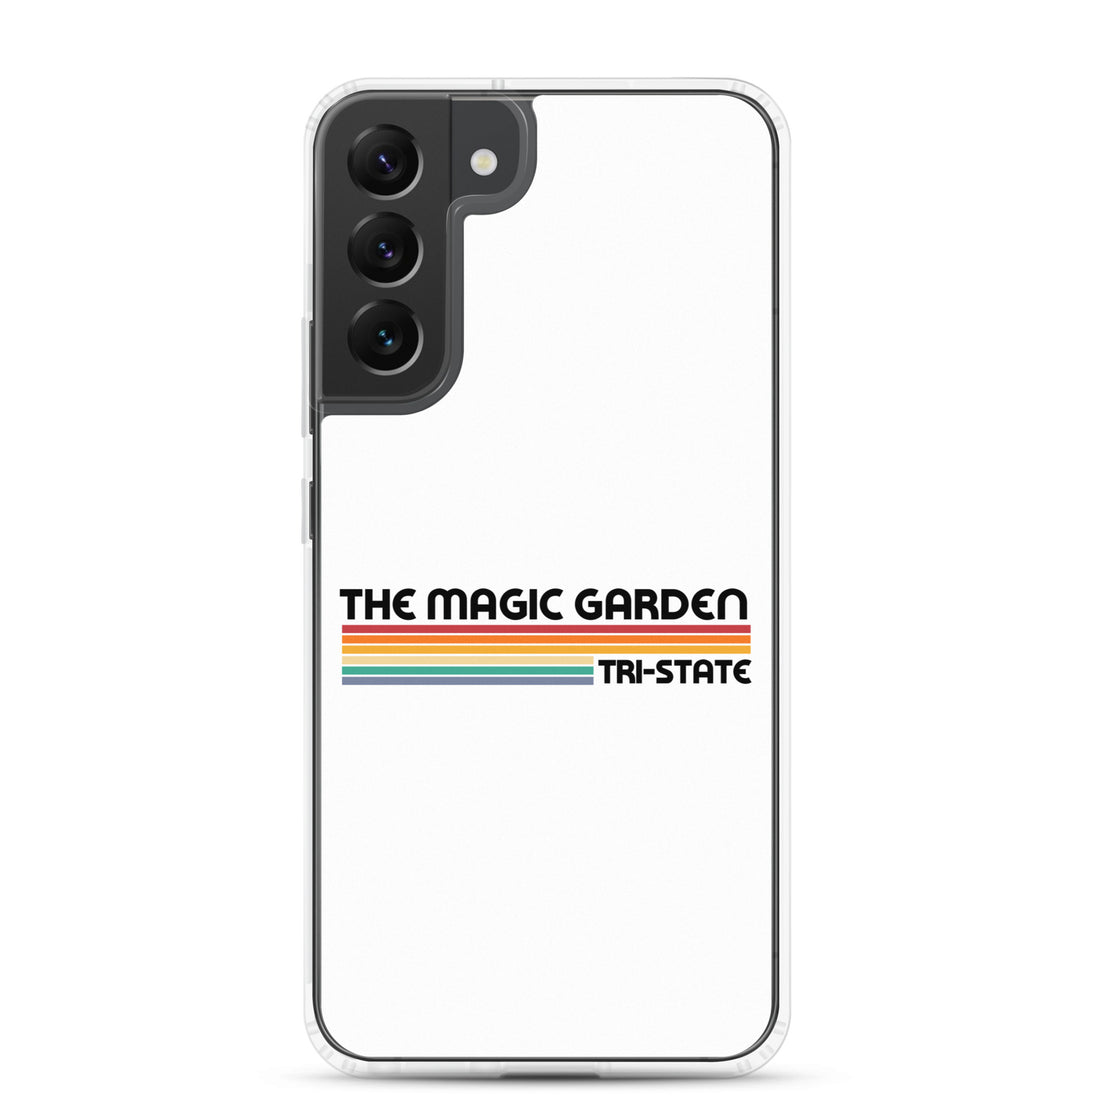 TMG Tri-State Samsung Phone Cover, White